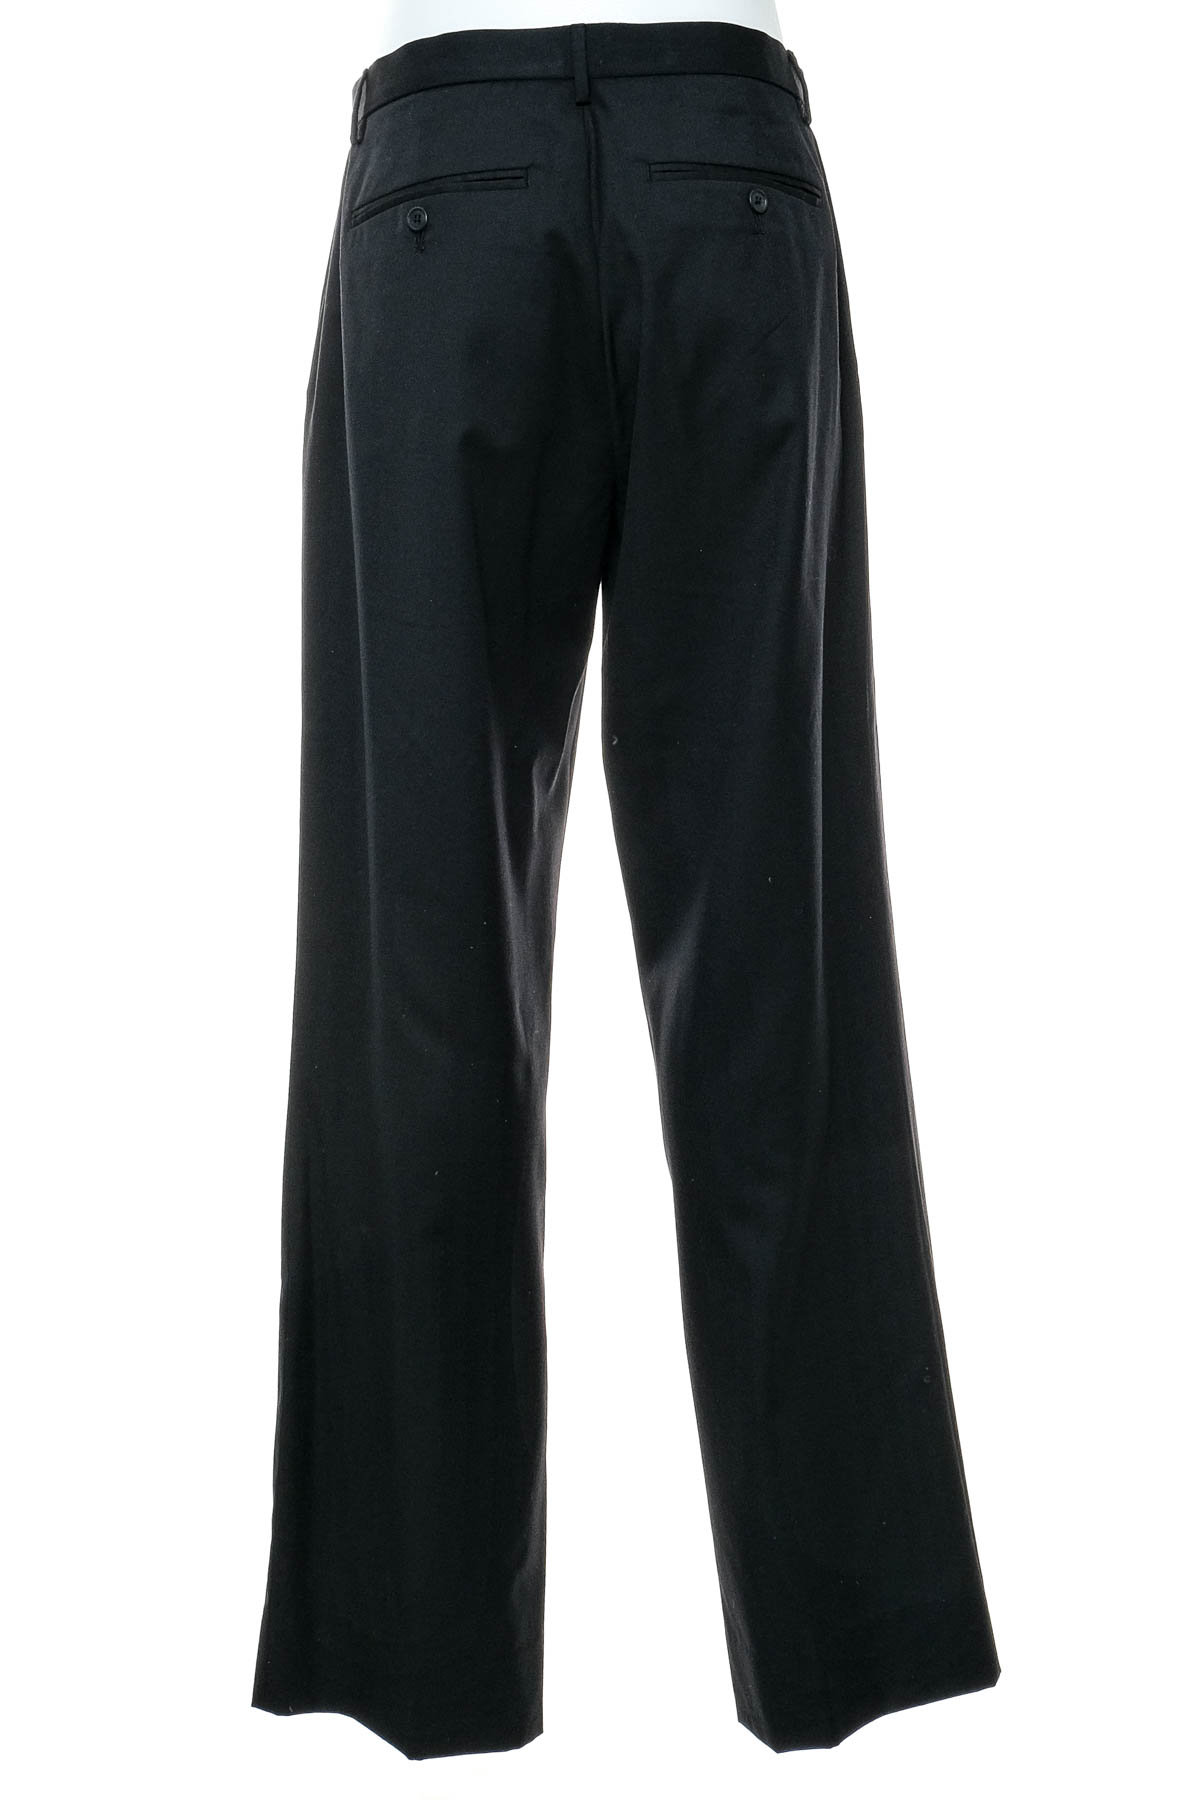 Men's trousers - Calvin Klein - 1